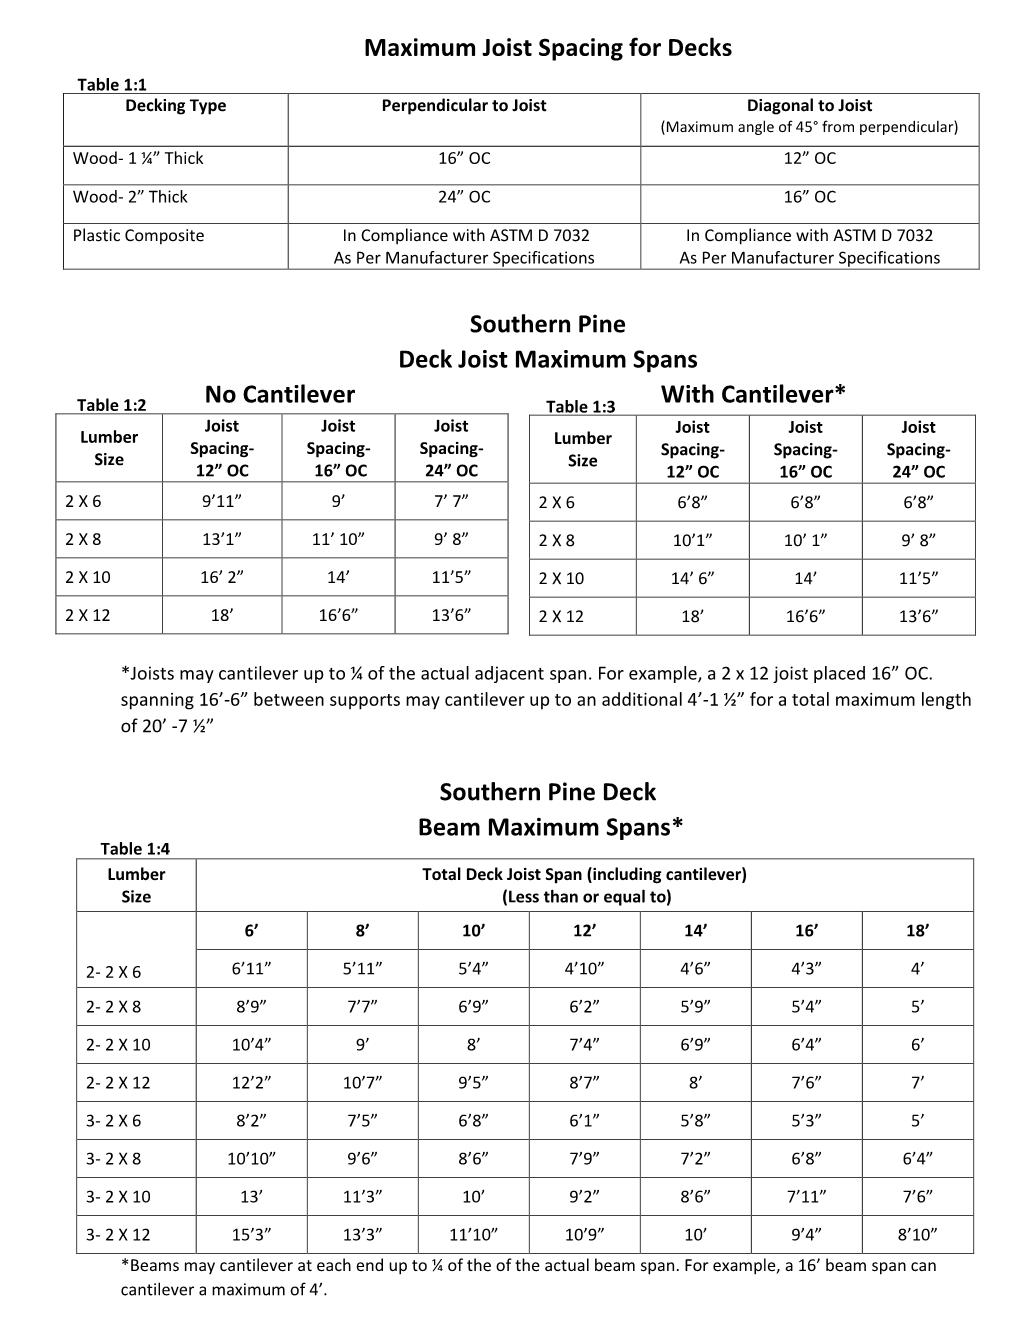 Maximum Joist Spacing for Decks Southern Pine Deck Joist Maximum Spans No Cantilever with Cantilever* Southern Pine Deck Be